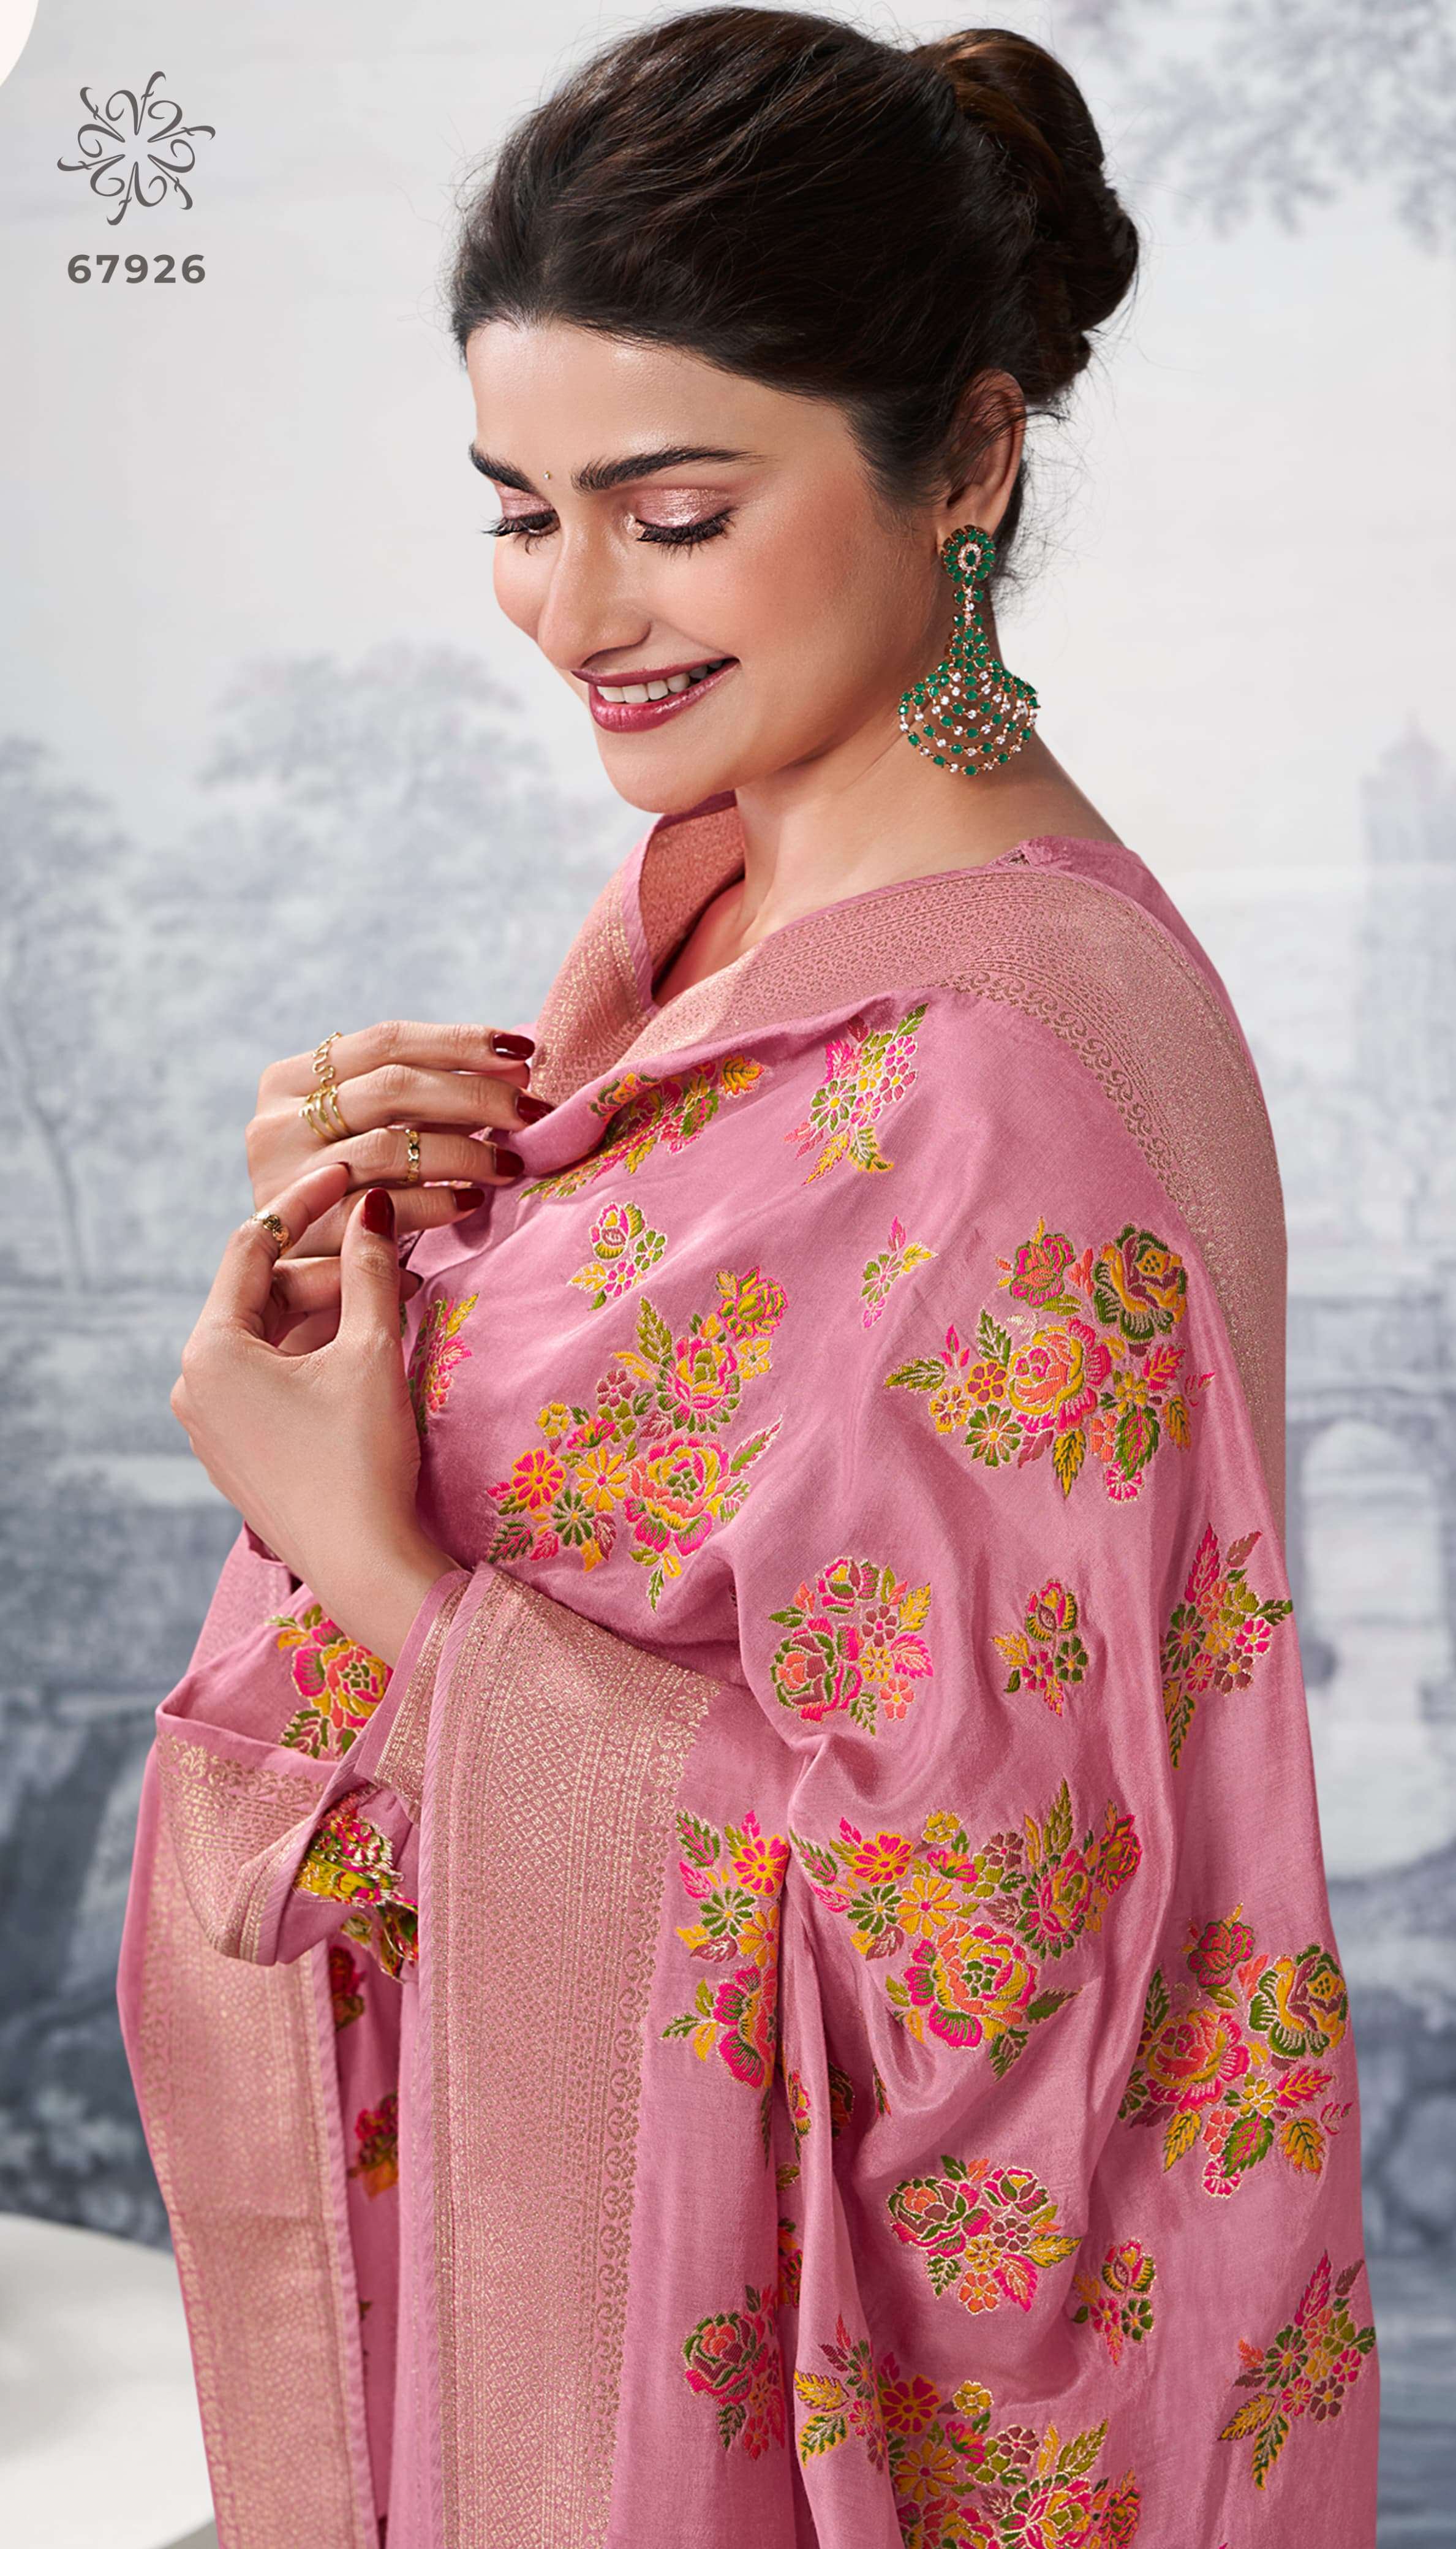 vinay fashion kuleesh sanaya 2 machlin jacquard gorgeous look salwar suit catalog